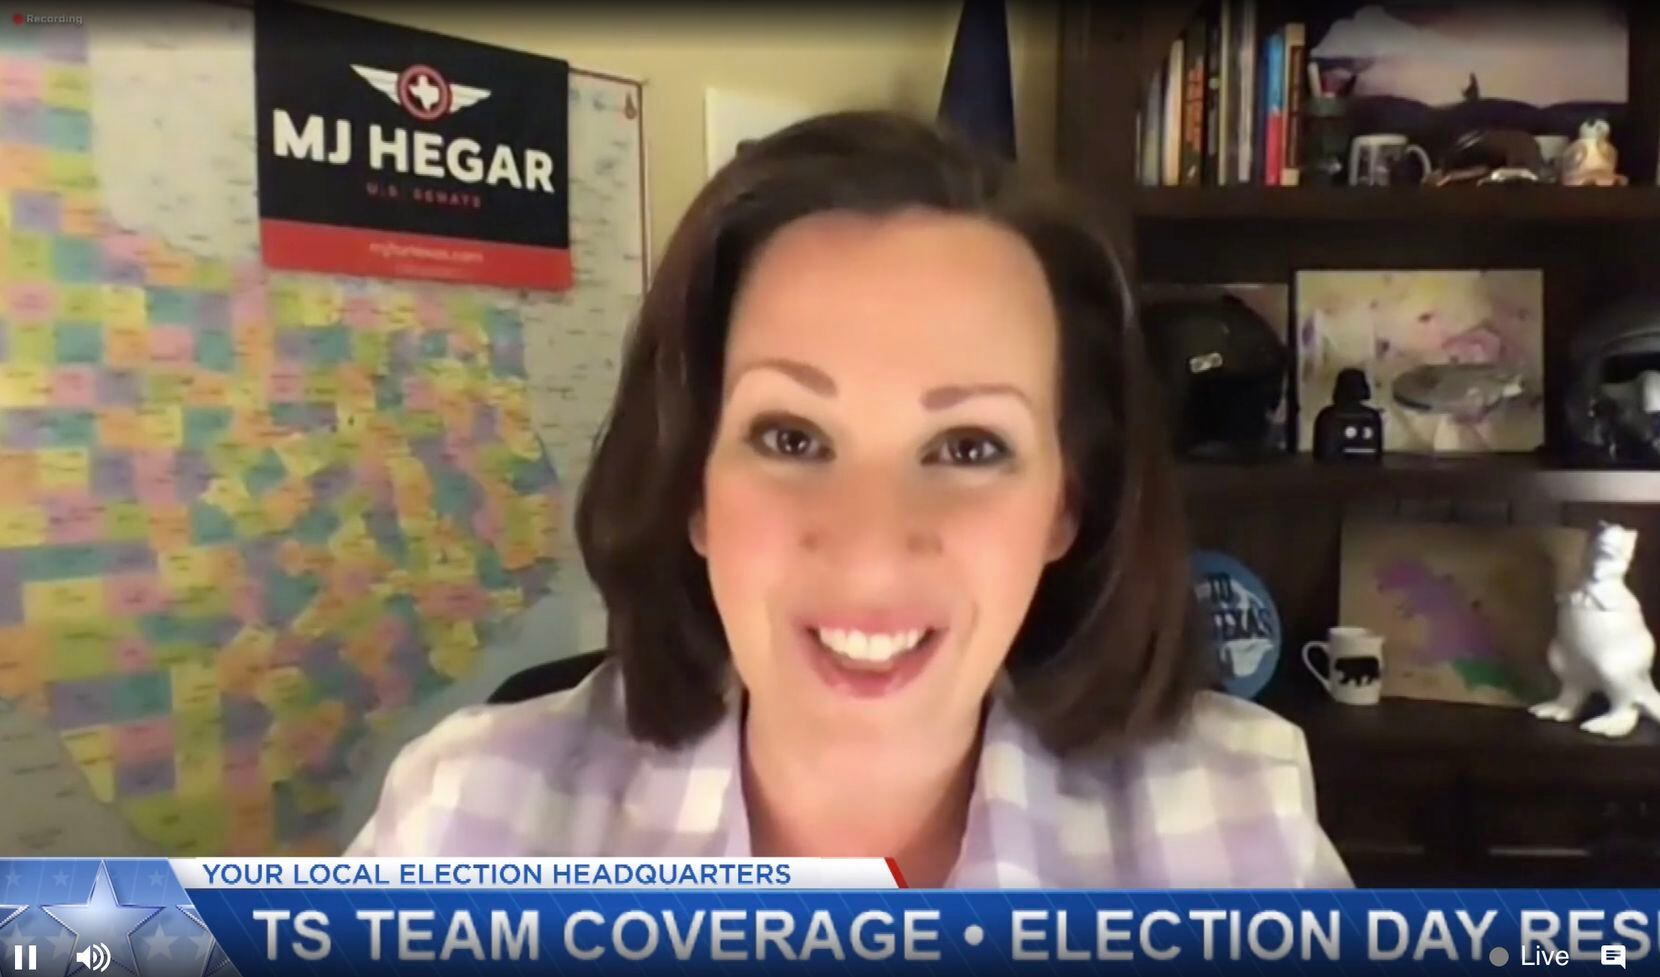 MJ Hegar, Democratic candidate for U.S. Senate, conceded defeat to incumbent GOP Sen. John...